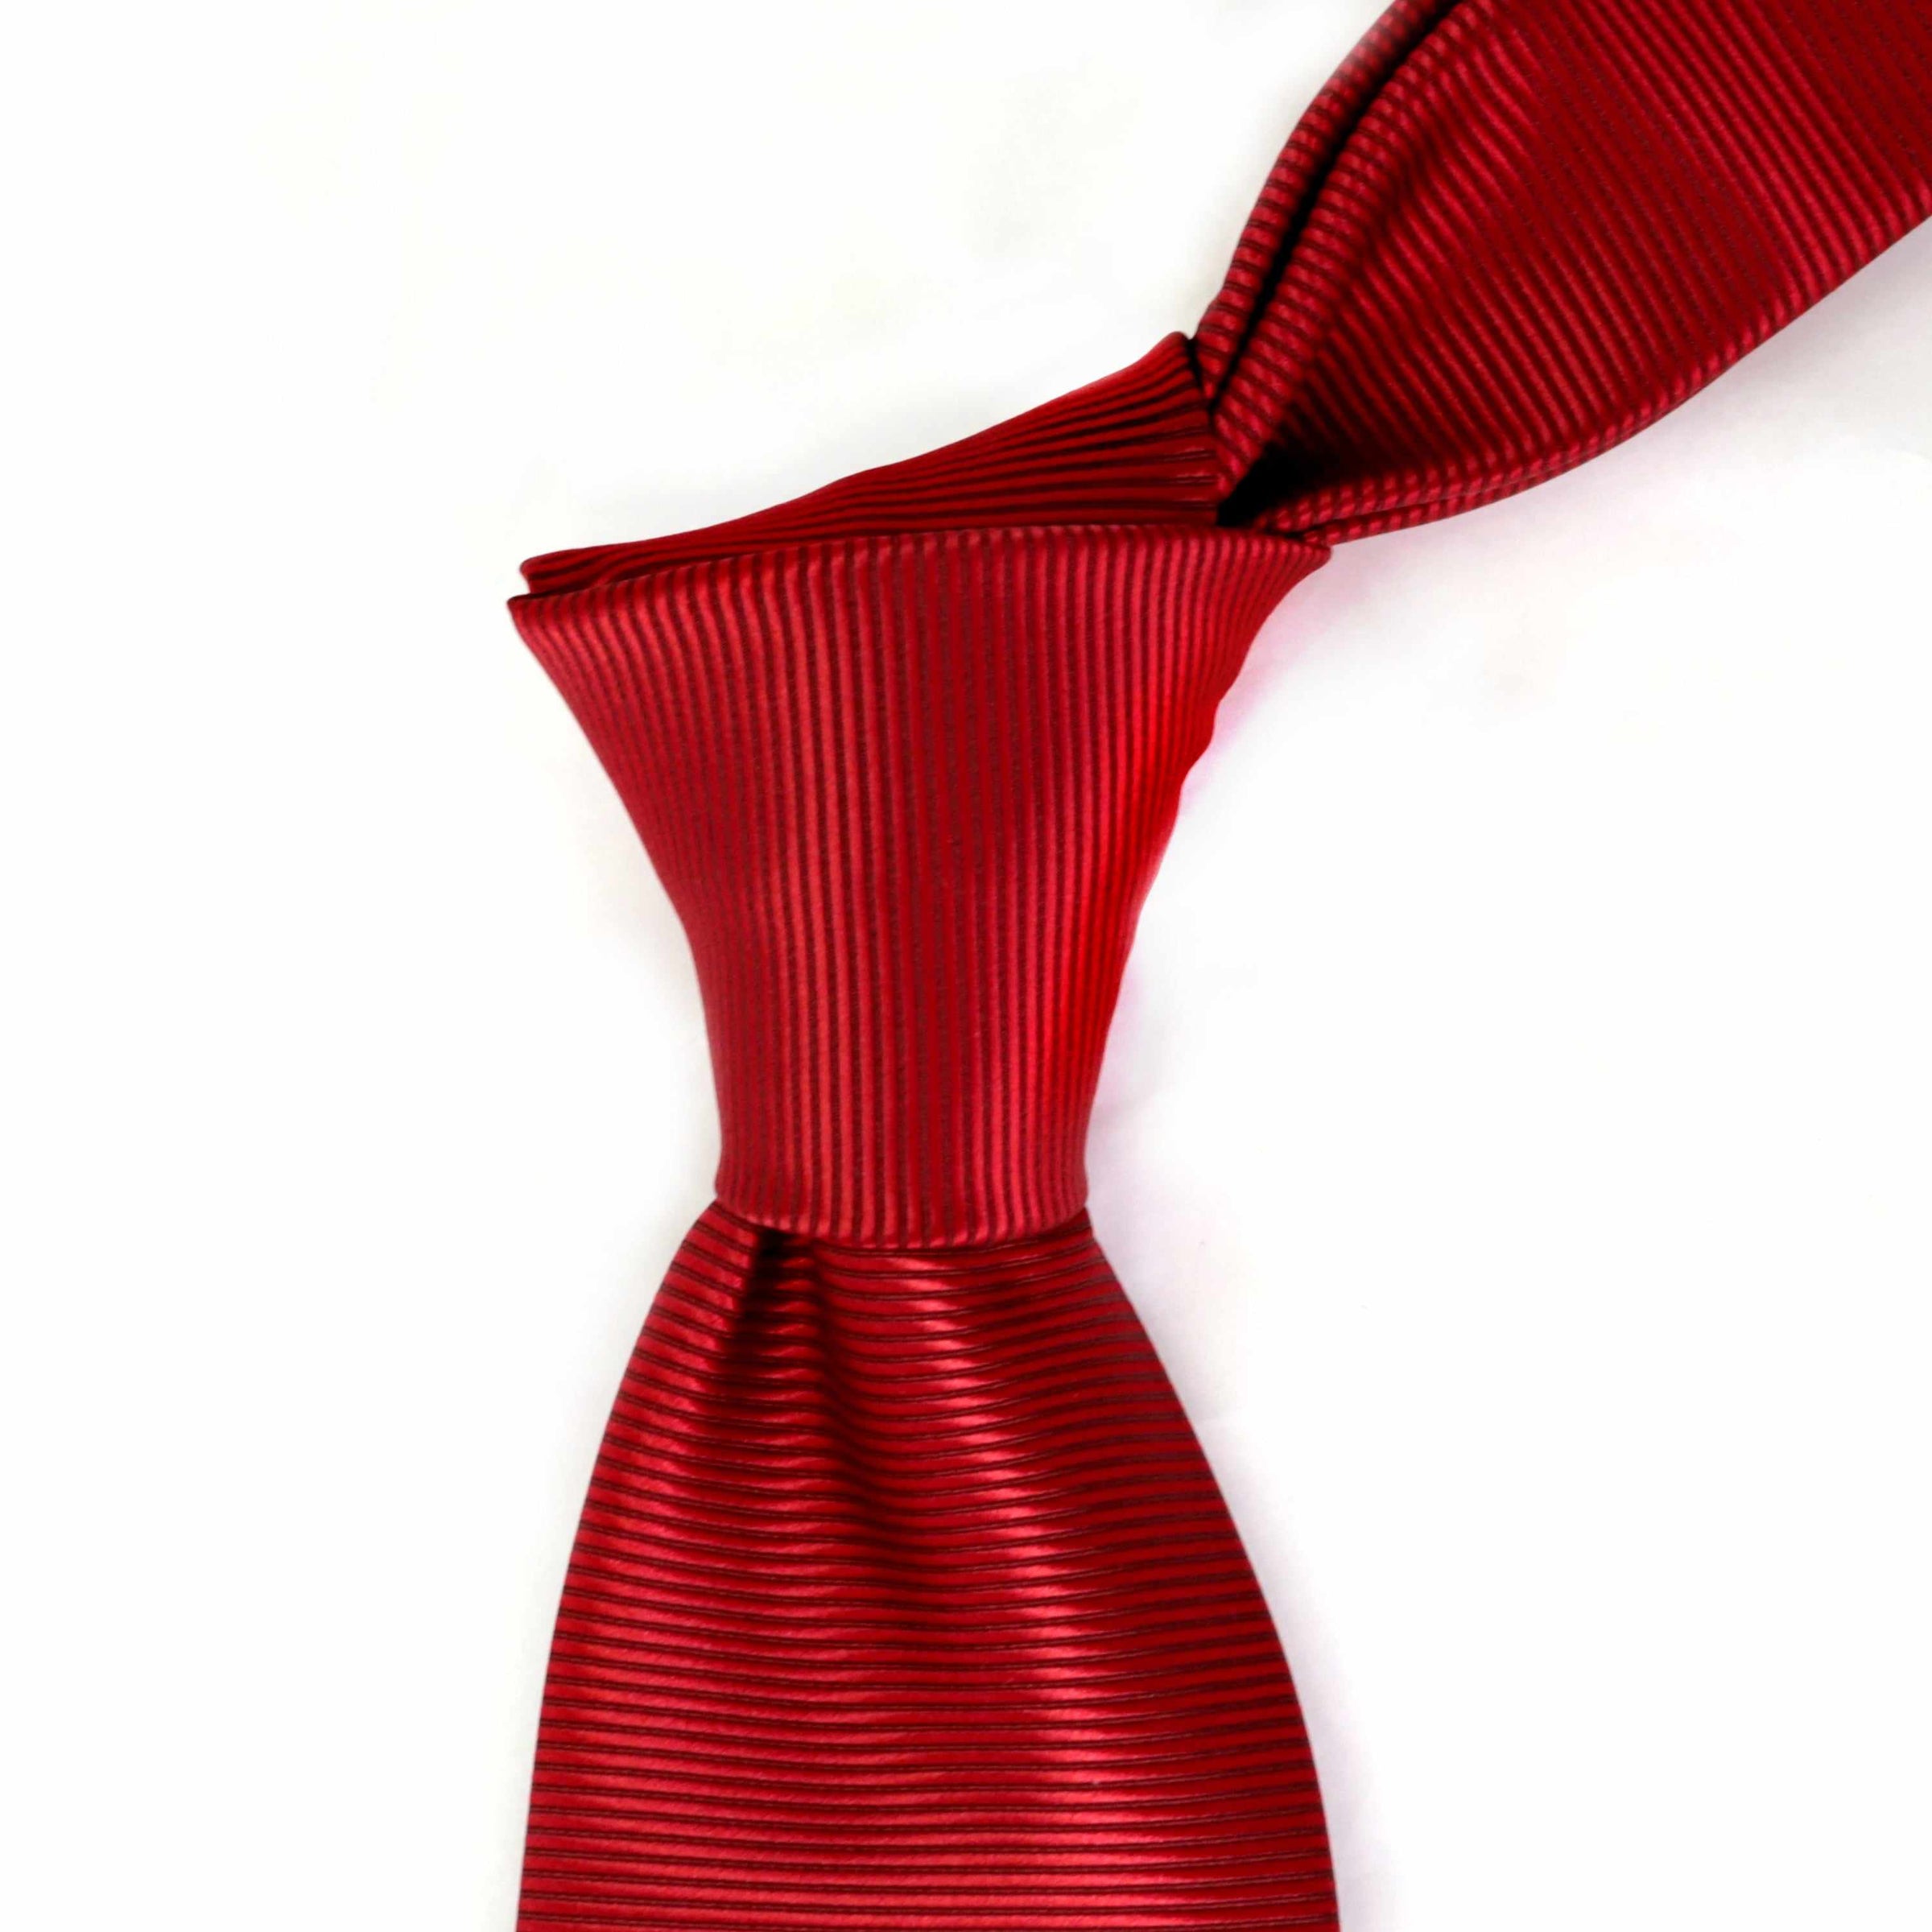 Orobianco L'unique Heavy Twille Red-Neckties-Orobianco L'unique-Cufflinks.com.sg